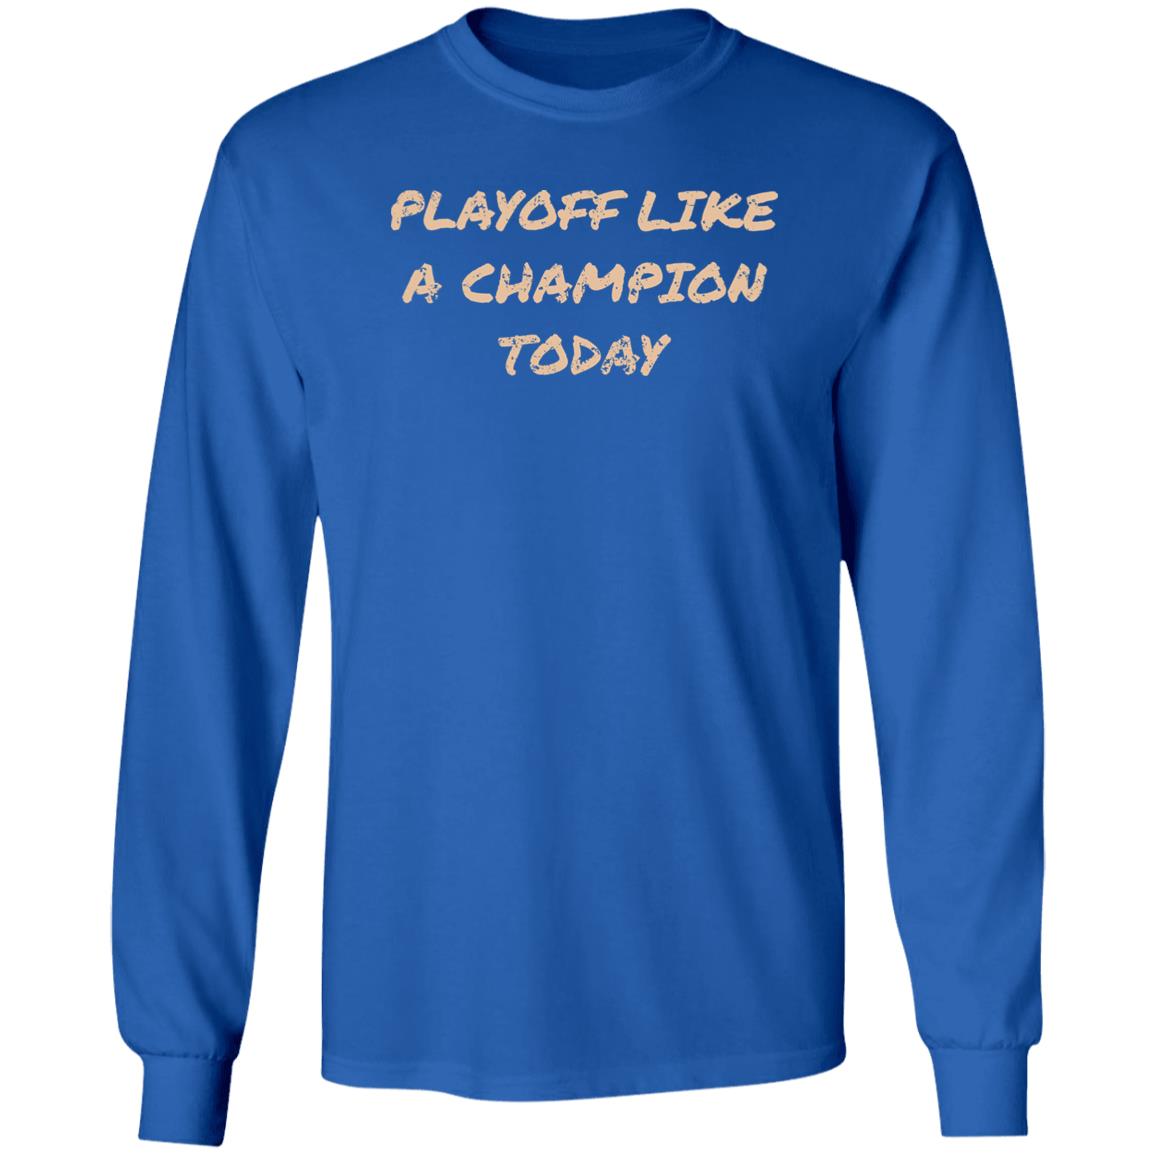 ThatsOurSign Playoff Like A Champion Today Shirt Travis J Davidson